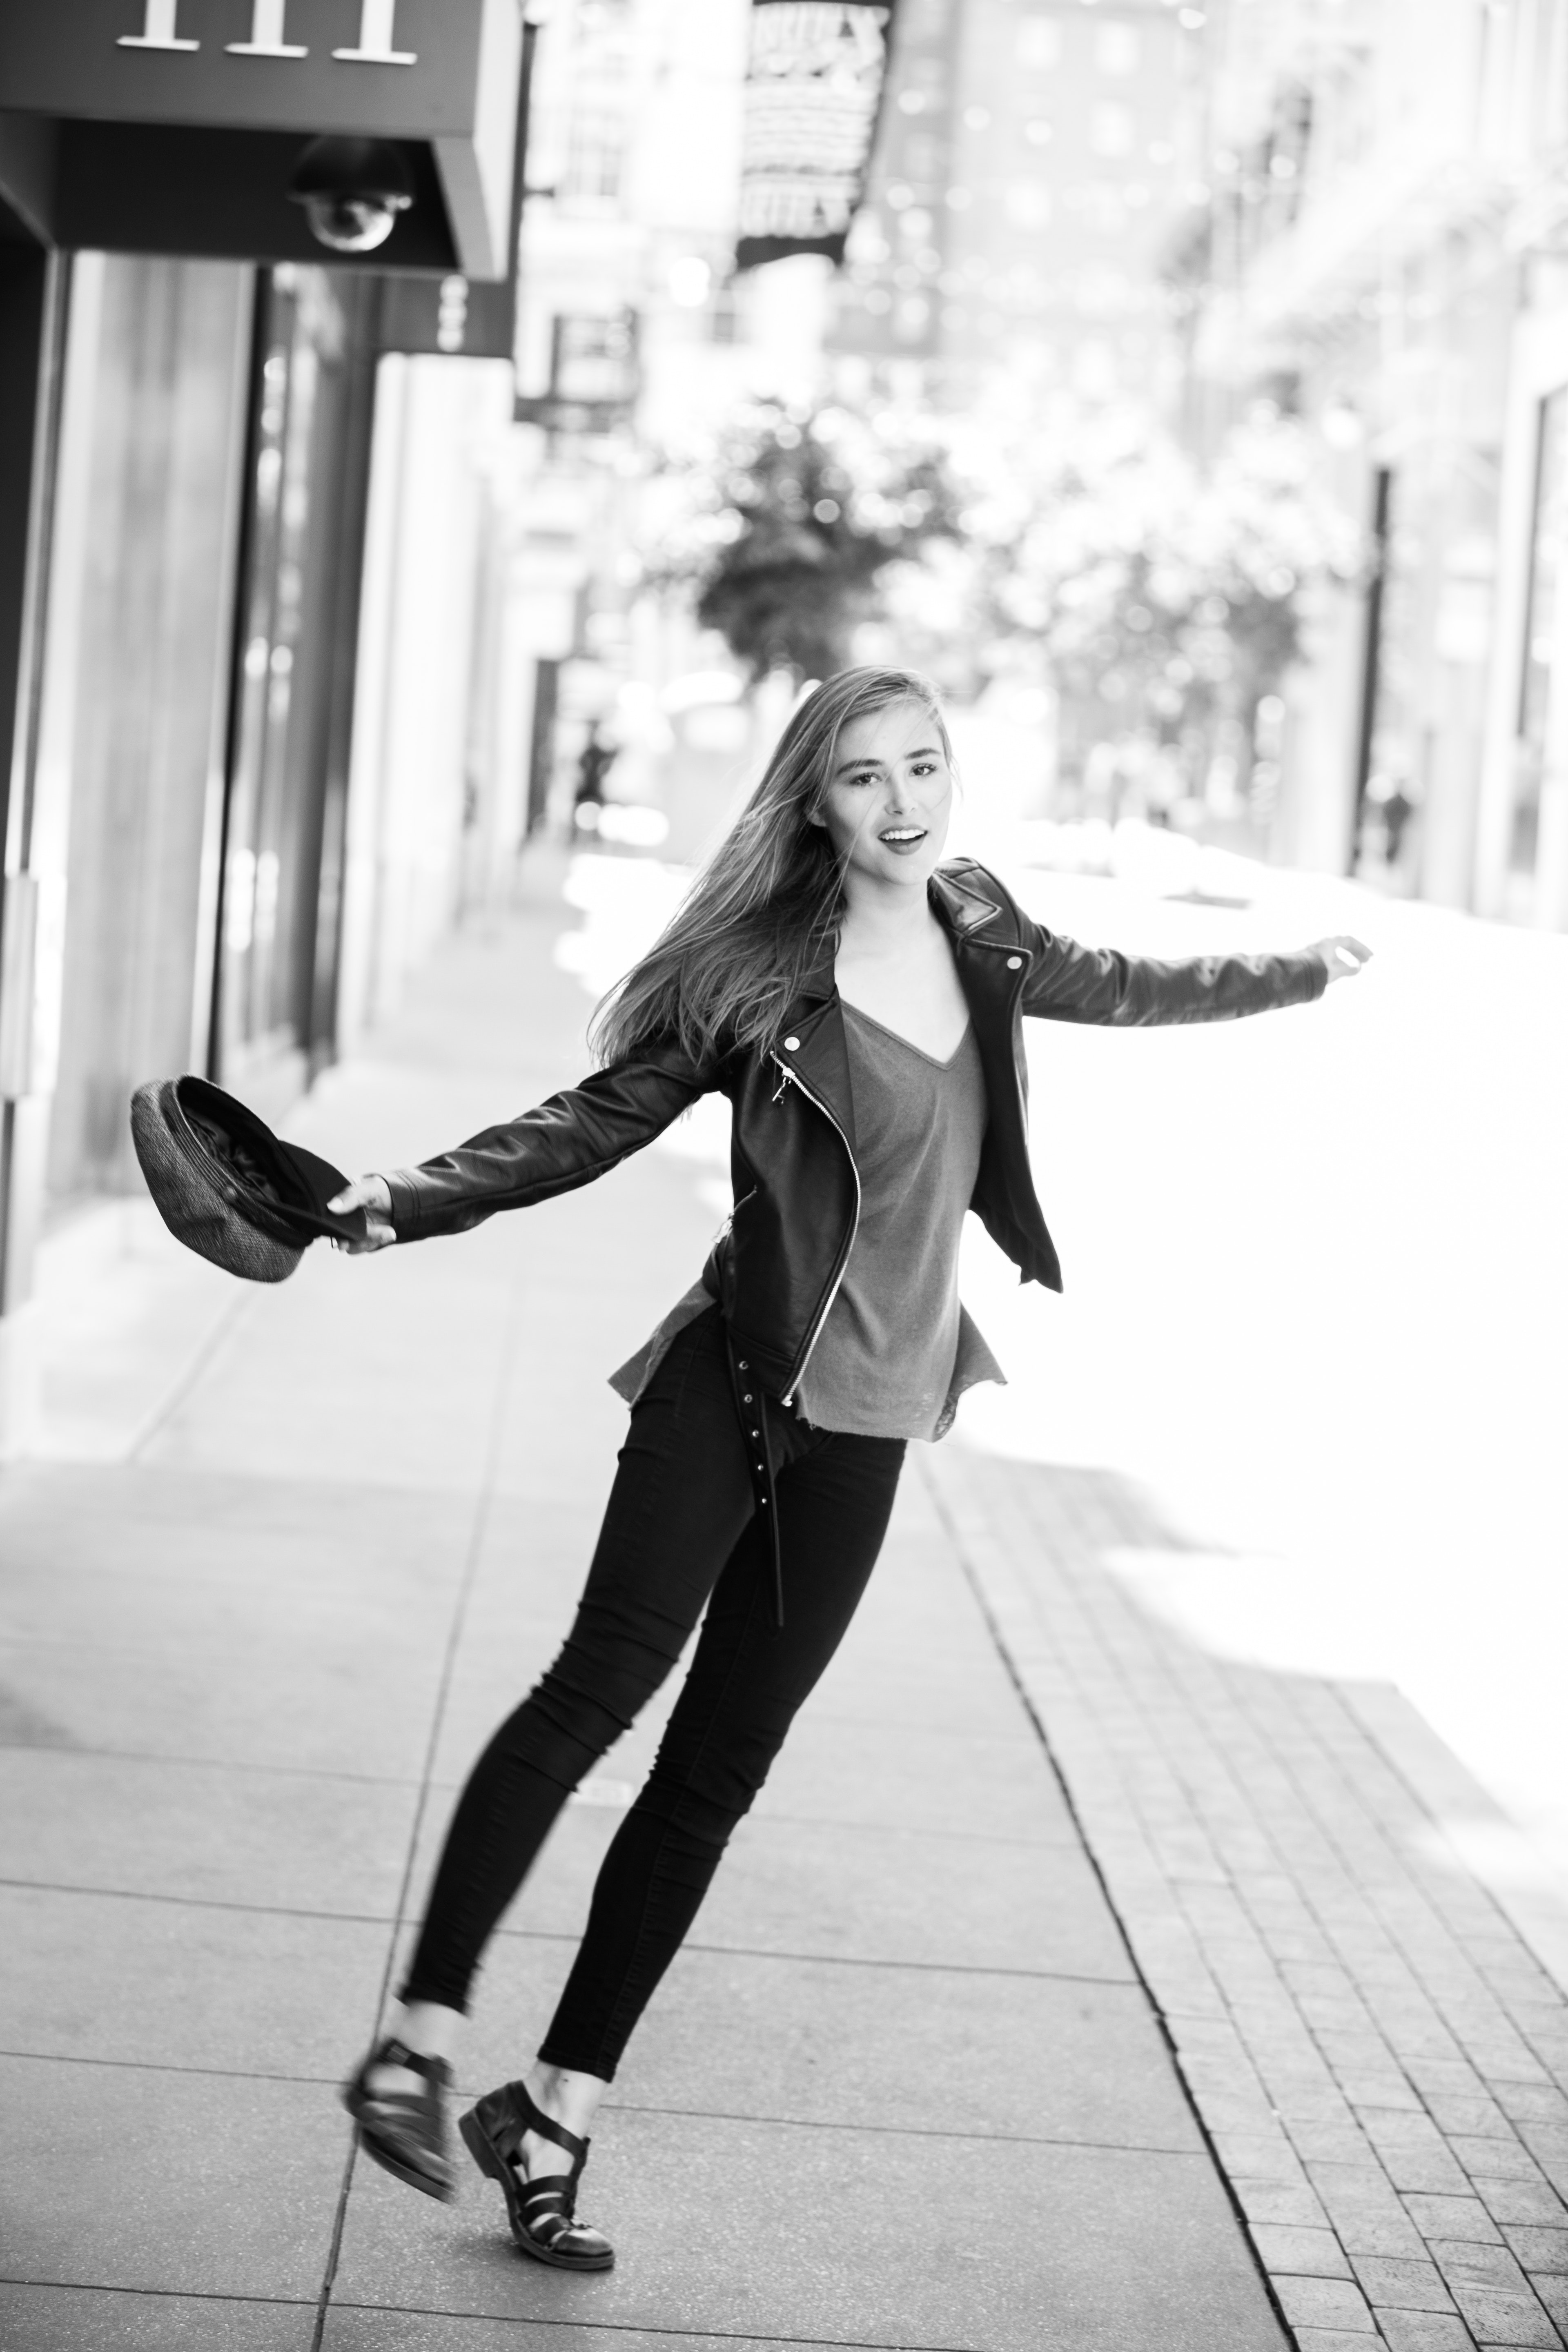 Free photo: Woman Wearing Black Leather Jacket Grayscale Photo ...